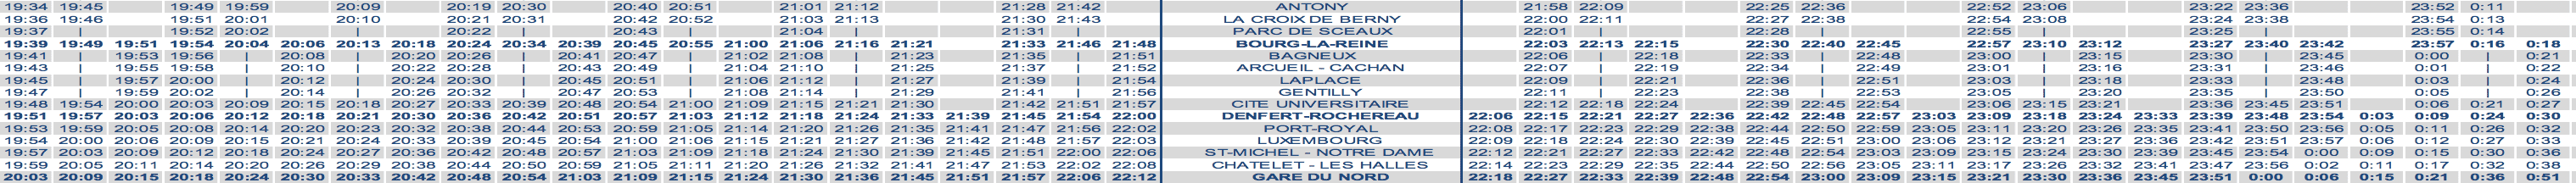 RER B Train Timetable Antony (ORY) to Paris Evening Weekday 2020 Strike